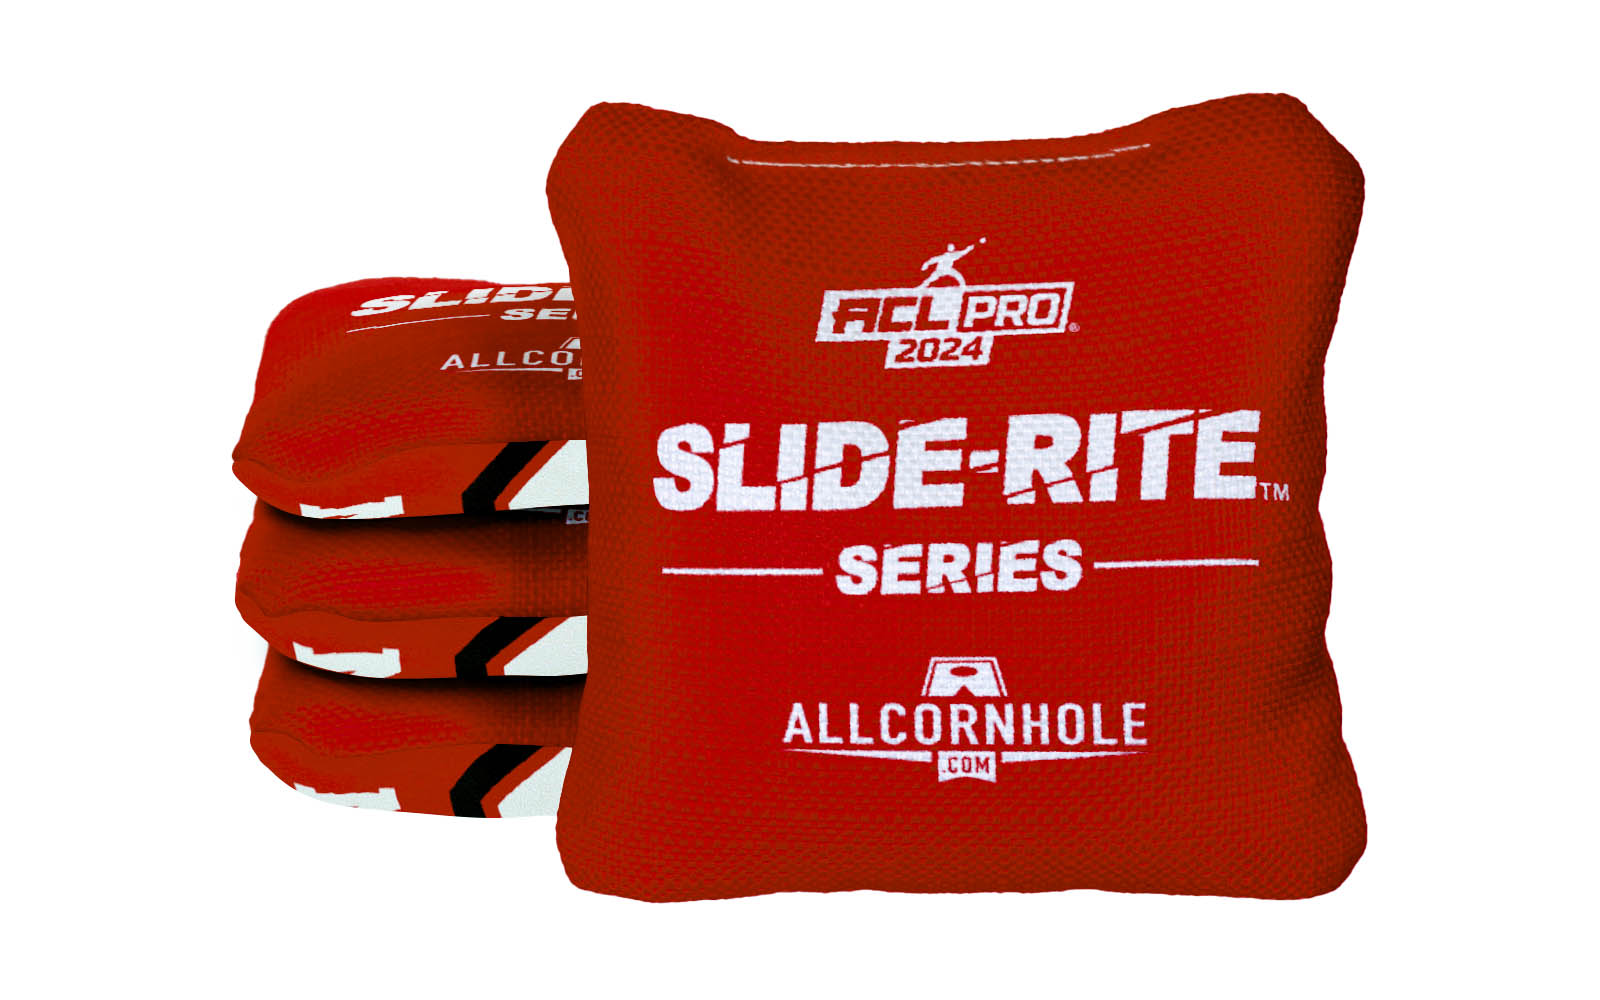 Officially Licensed Collegiate Cornhole Bags - AllCornhole Slide Rite - Set of 4 - North Carolina State University